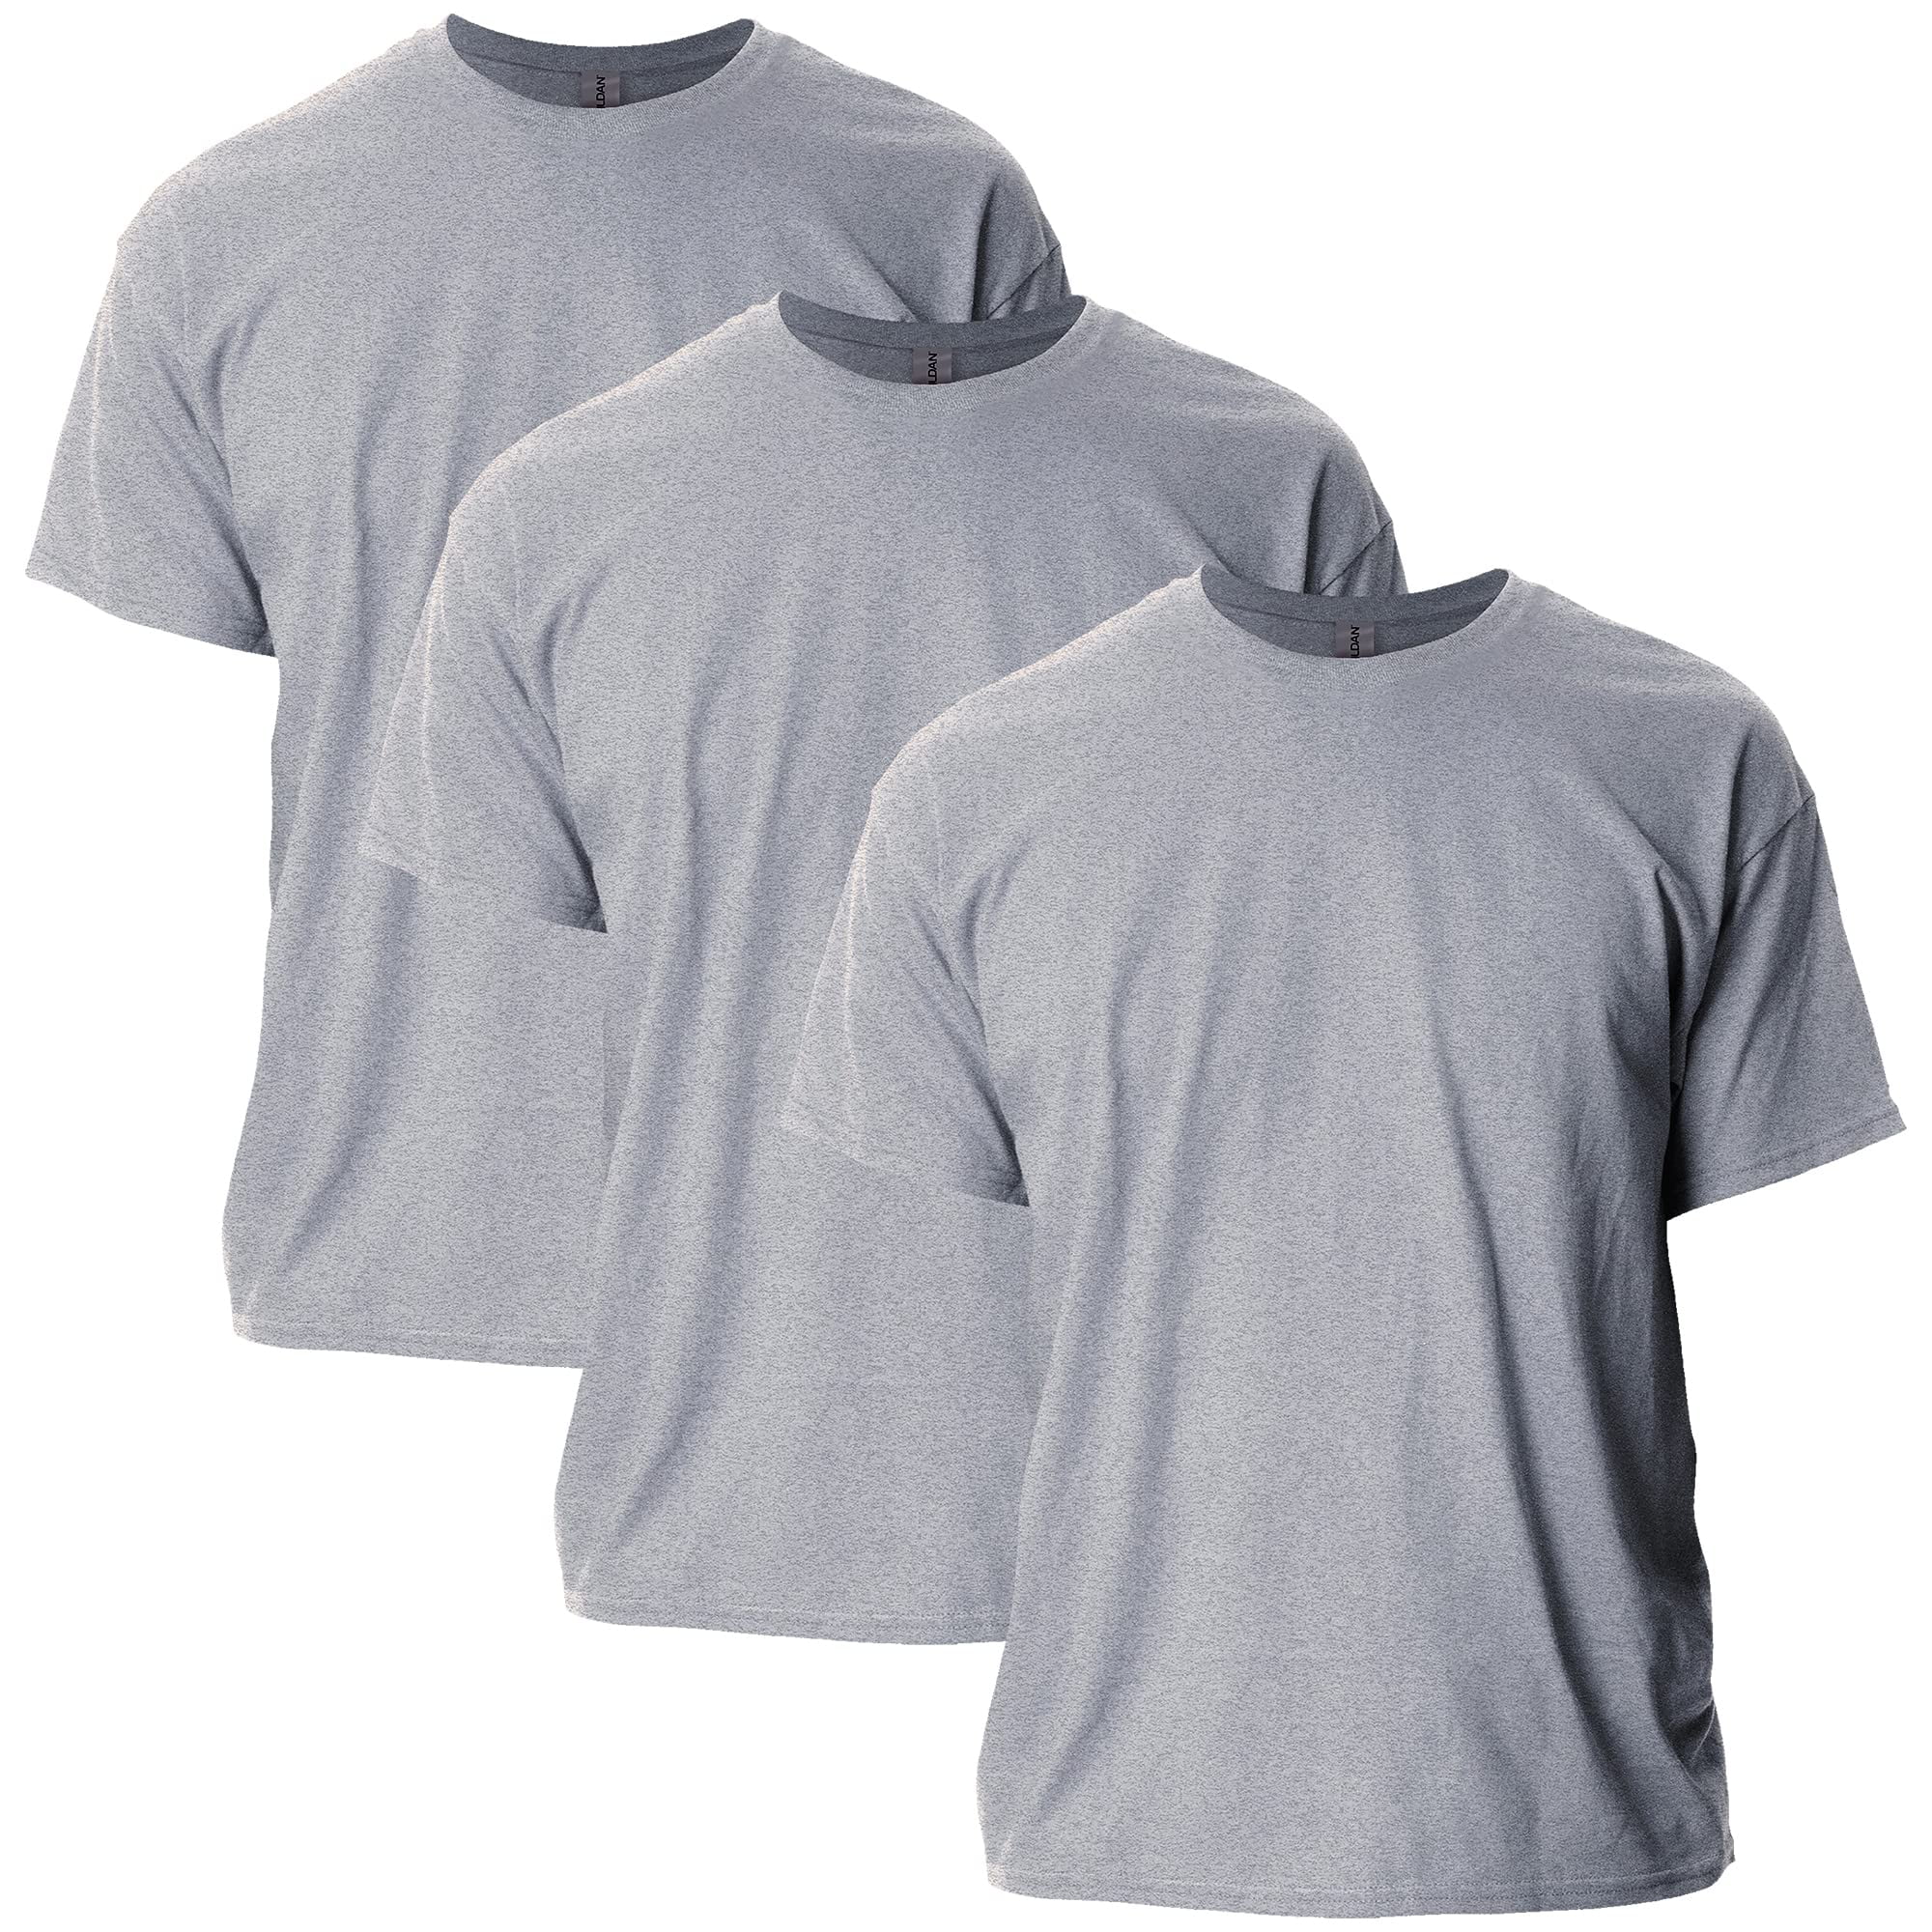 Gildan Adult Ultra Cotton T-Shirt, Style G2000, Multipack, Sport Grey 3-Pack,  Large